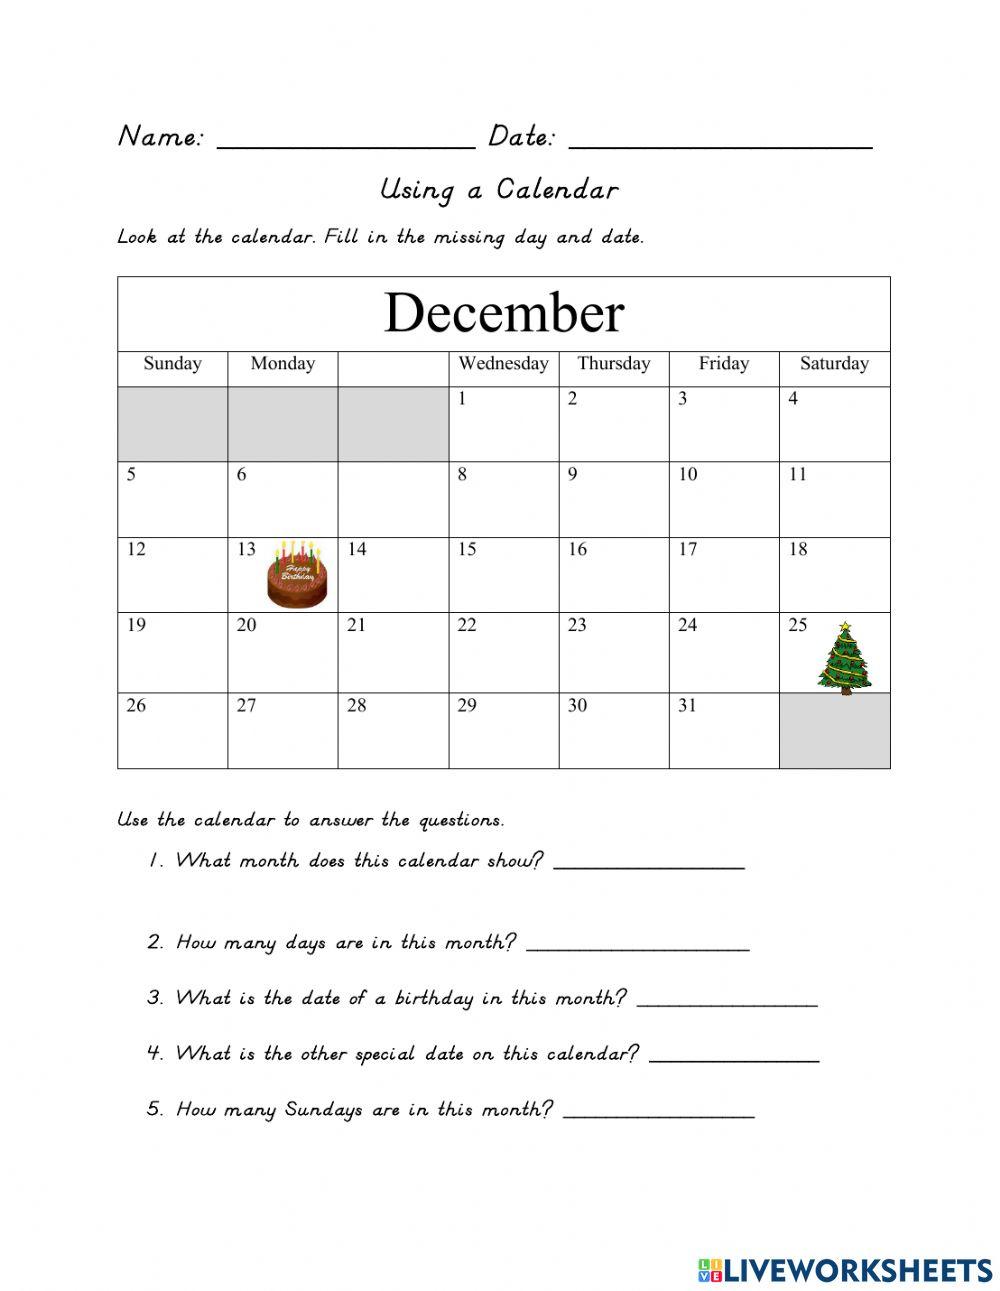 Using a Calendar 1